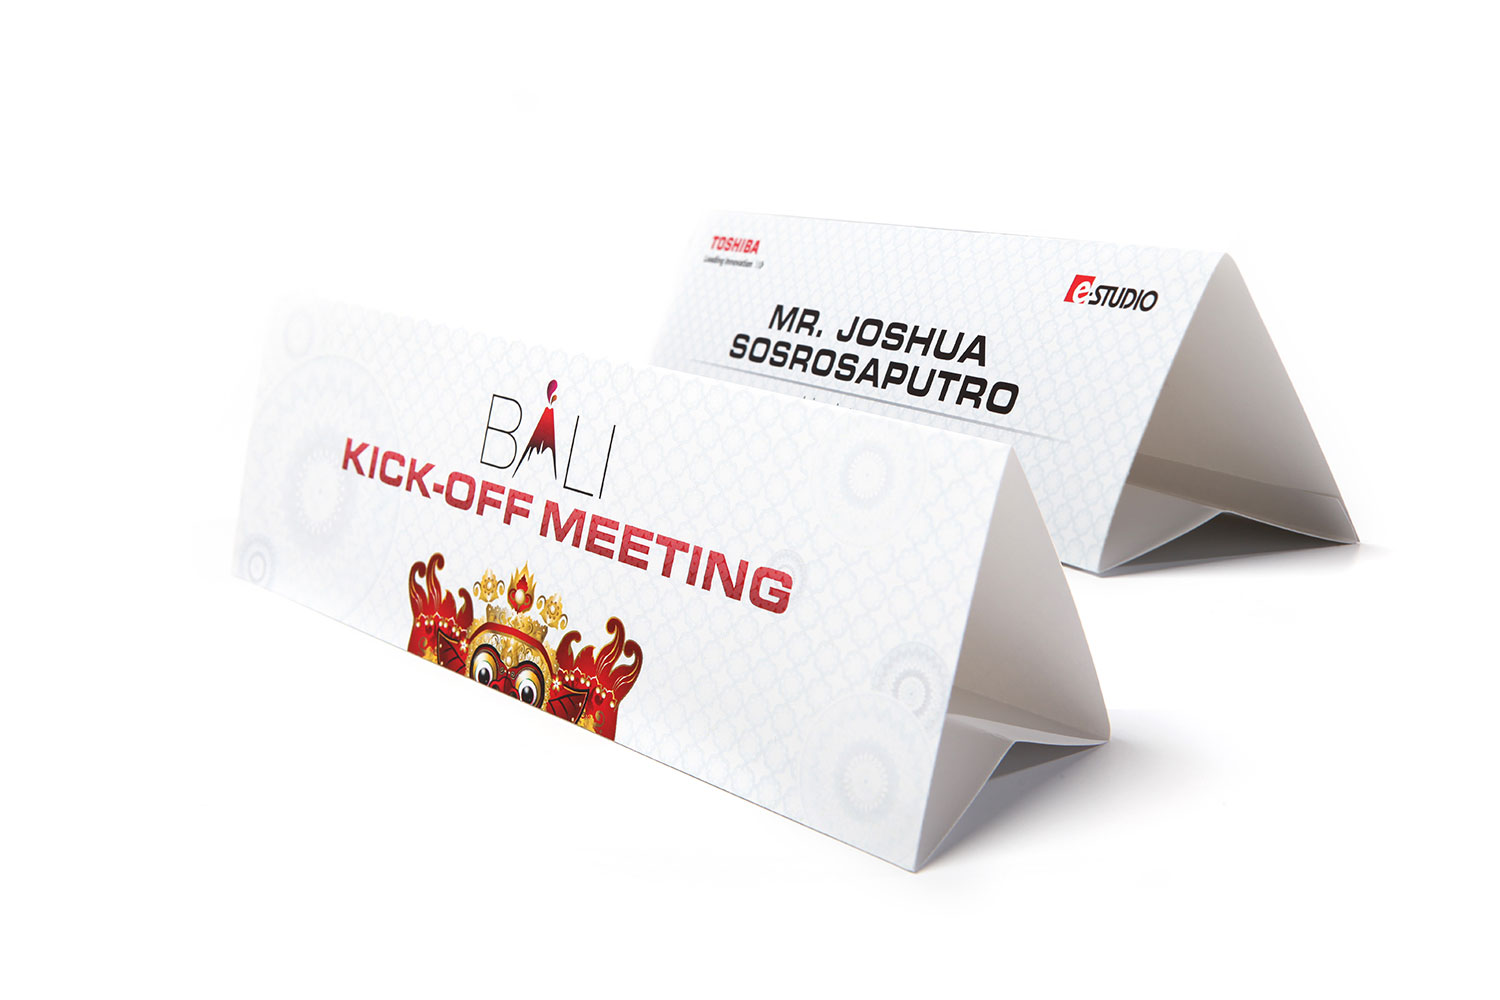 Kick-off Meeting event kit design Toshiba